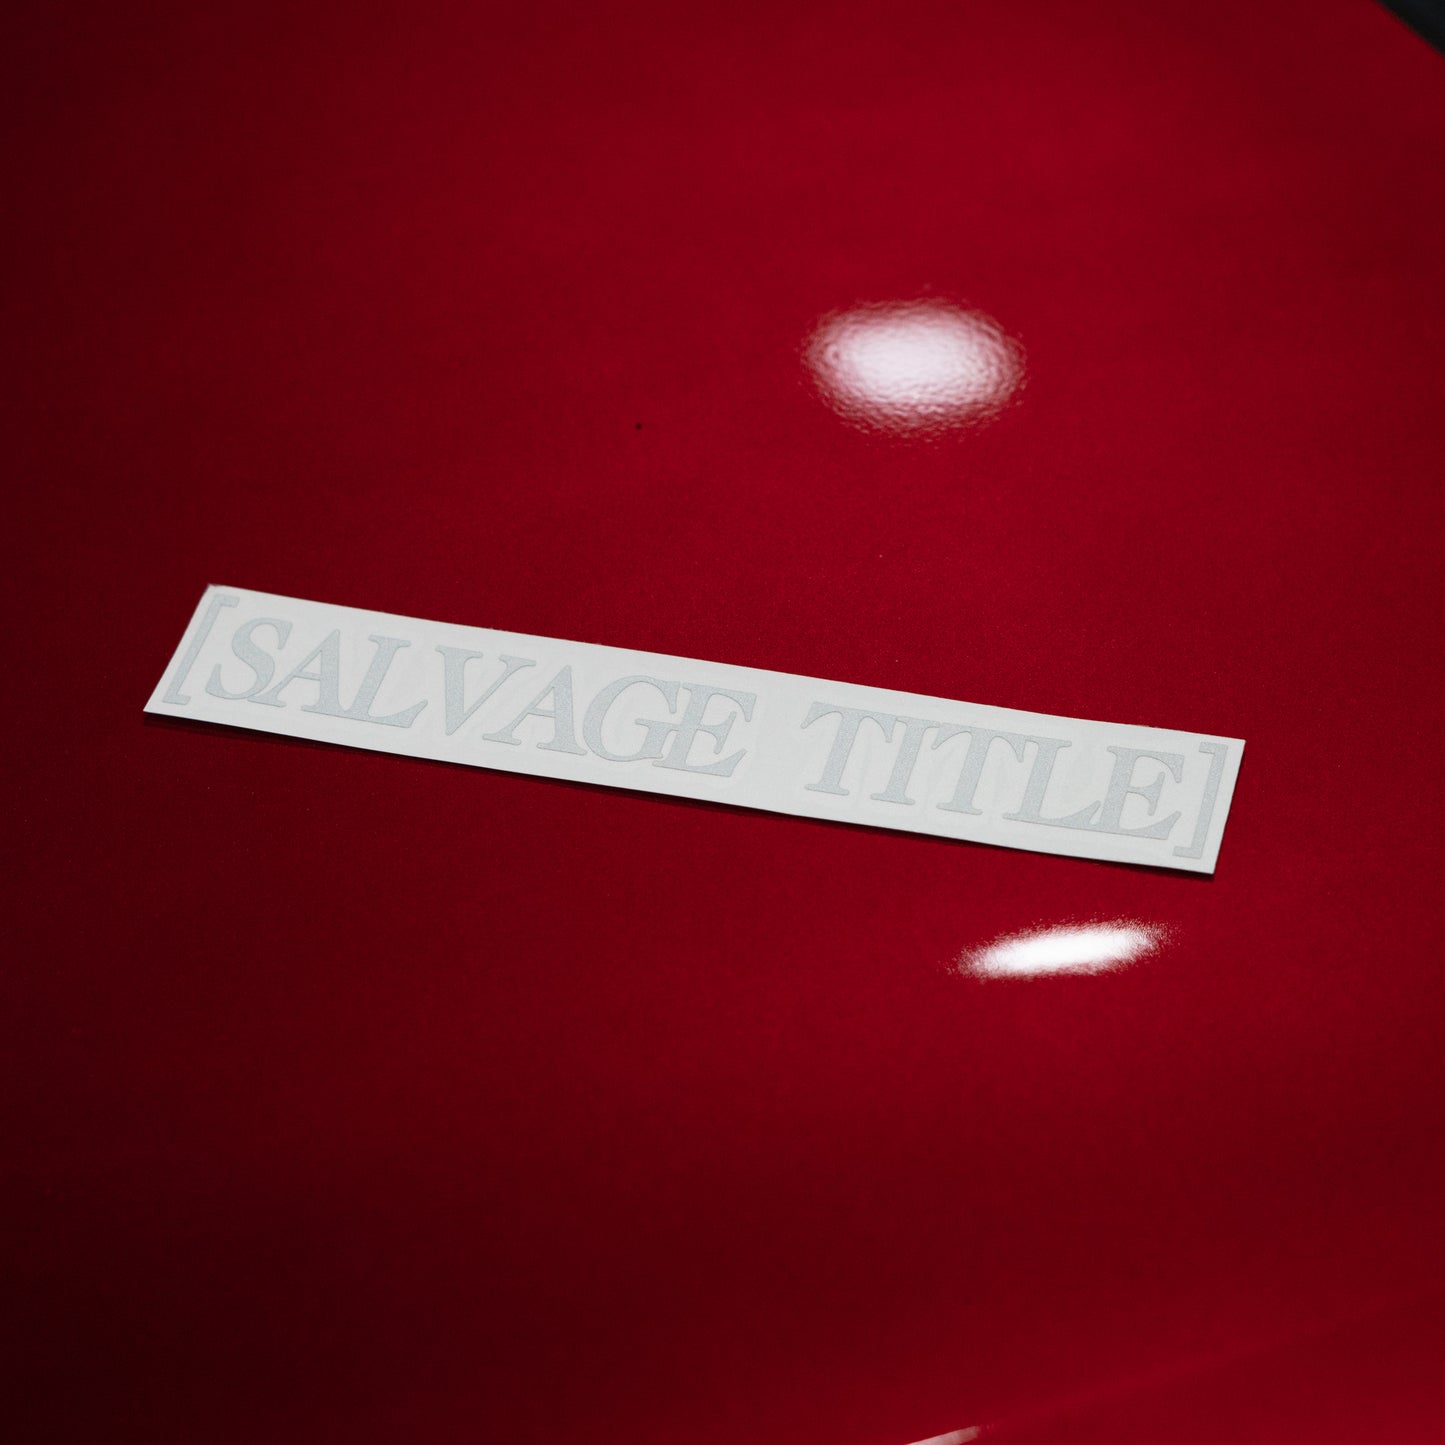 [𝙎𝙊𝙇𝘿 𝙊𝙐𝙏] 'SALVAGE TITLE' Reflective Sticker